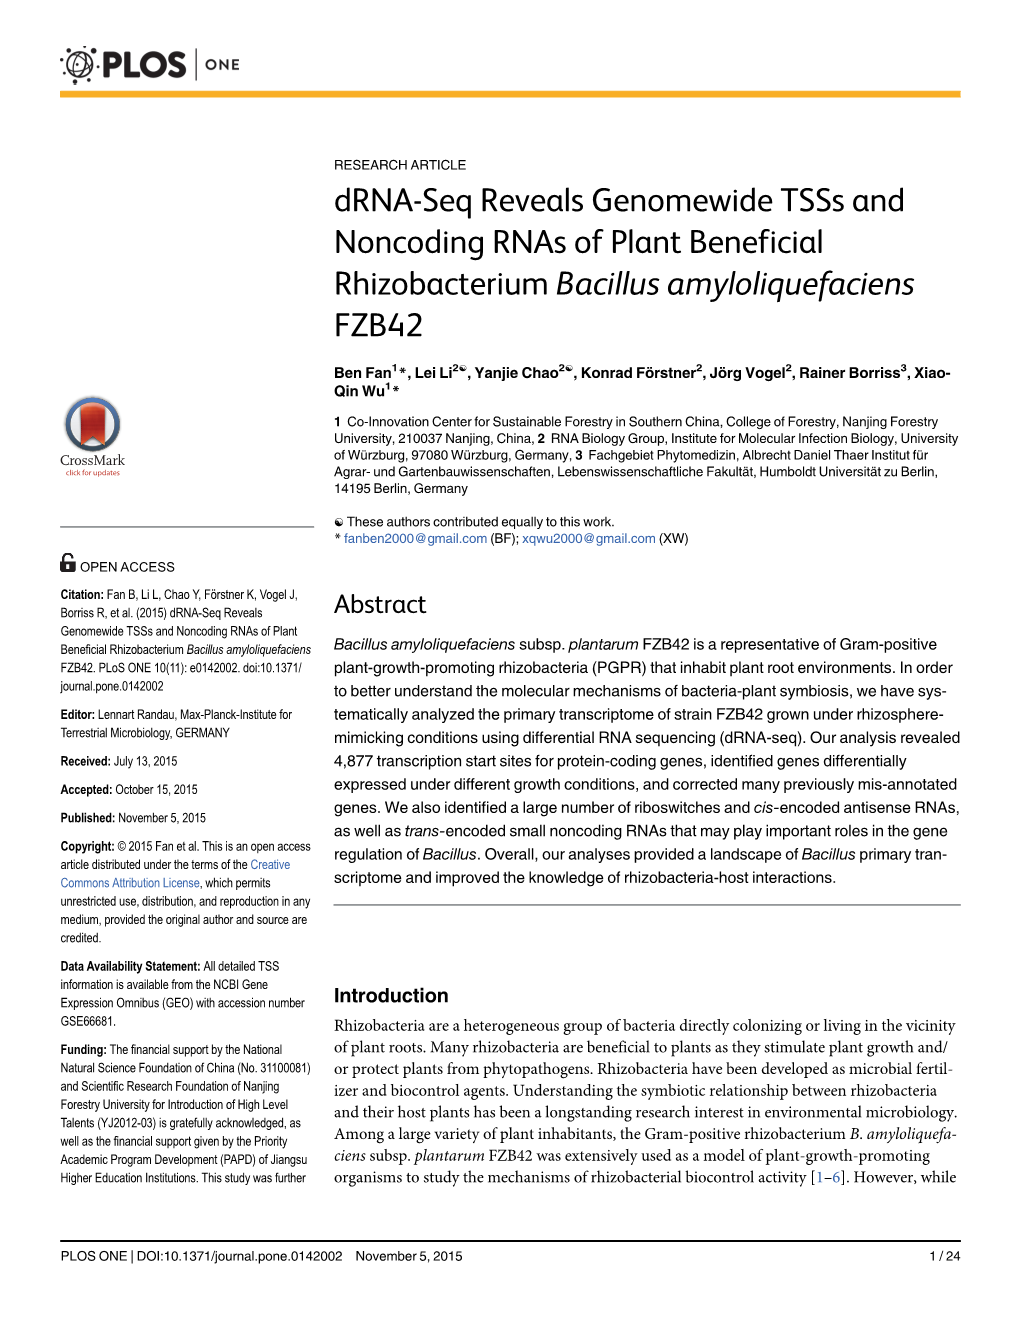 Drna-Seq Reveals Genomewide Tsss and Noncoding Rnas of Plant Beneficial Rhizobacterium Bacillus Amyloliquefaciens FZB42